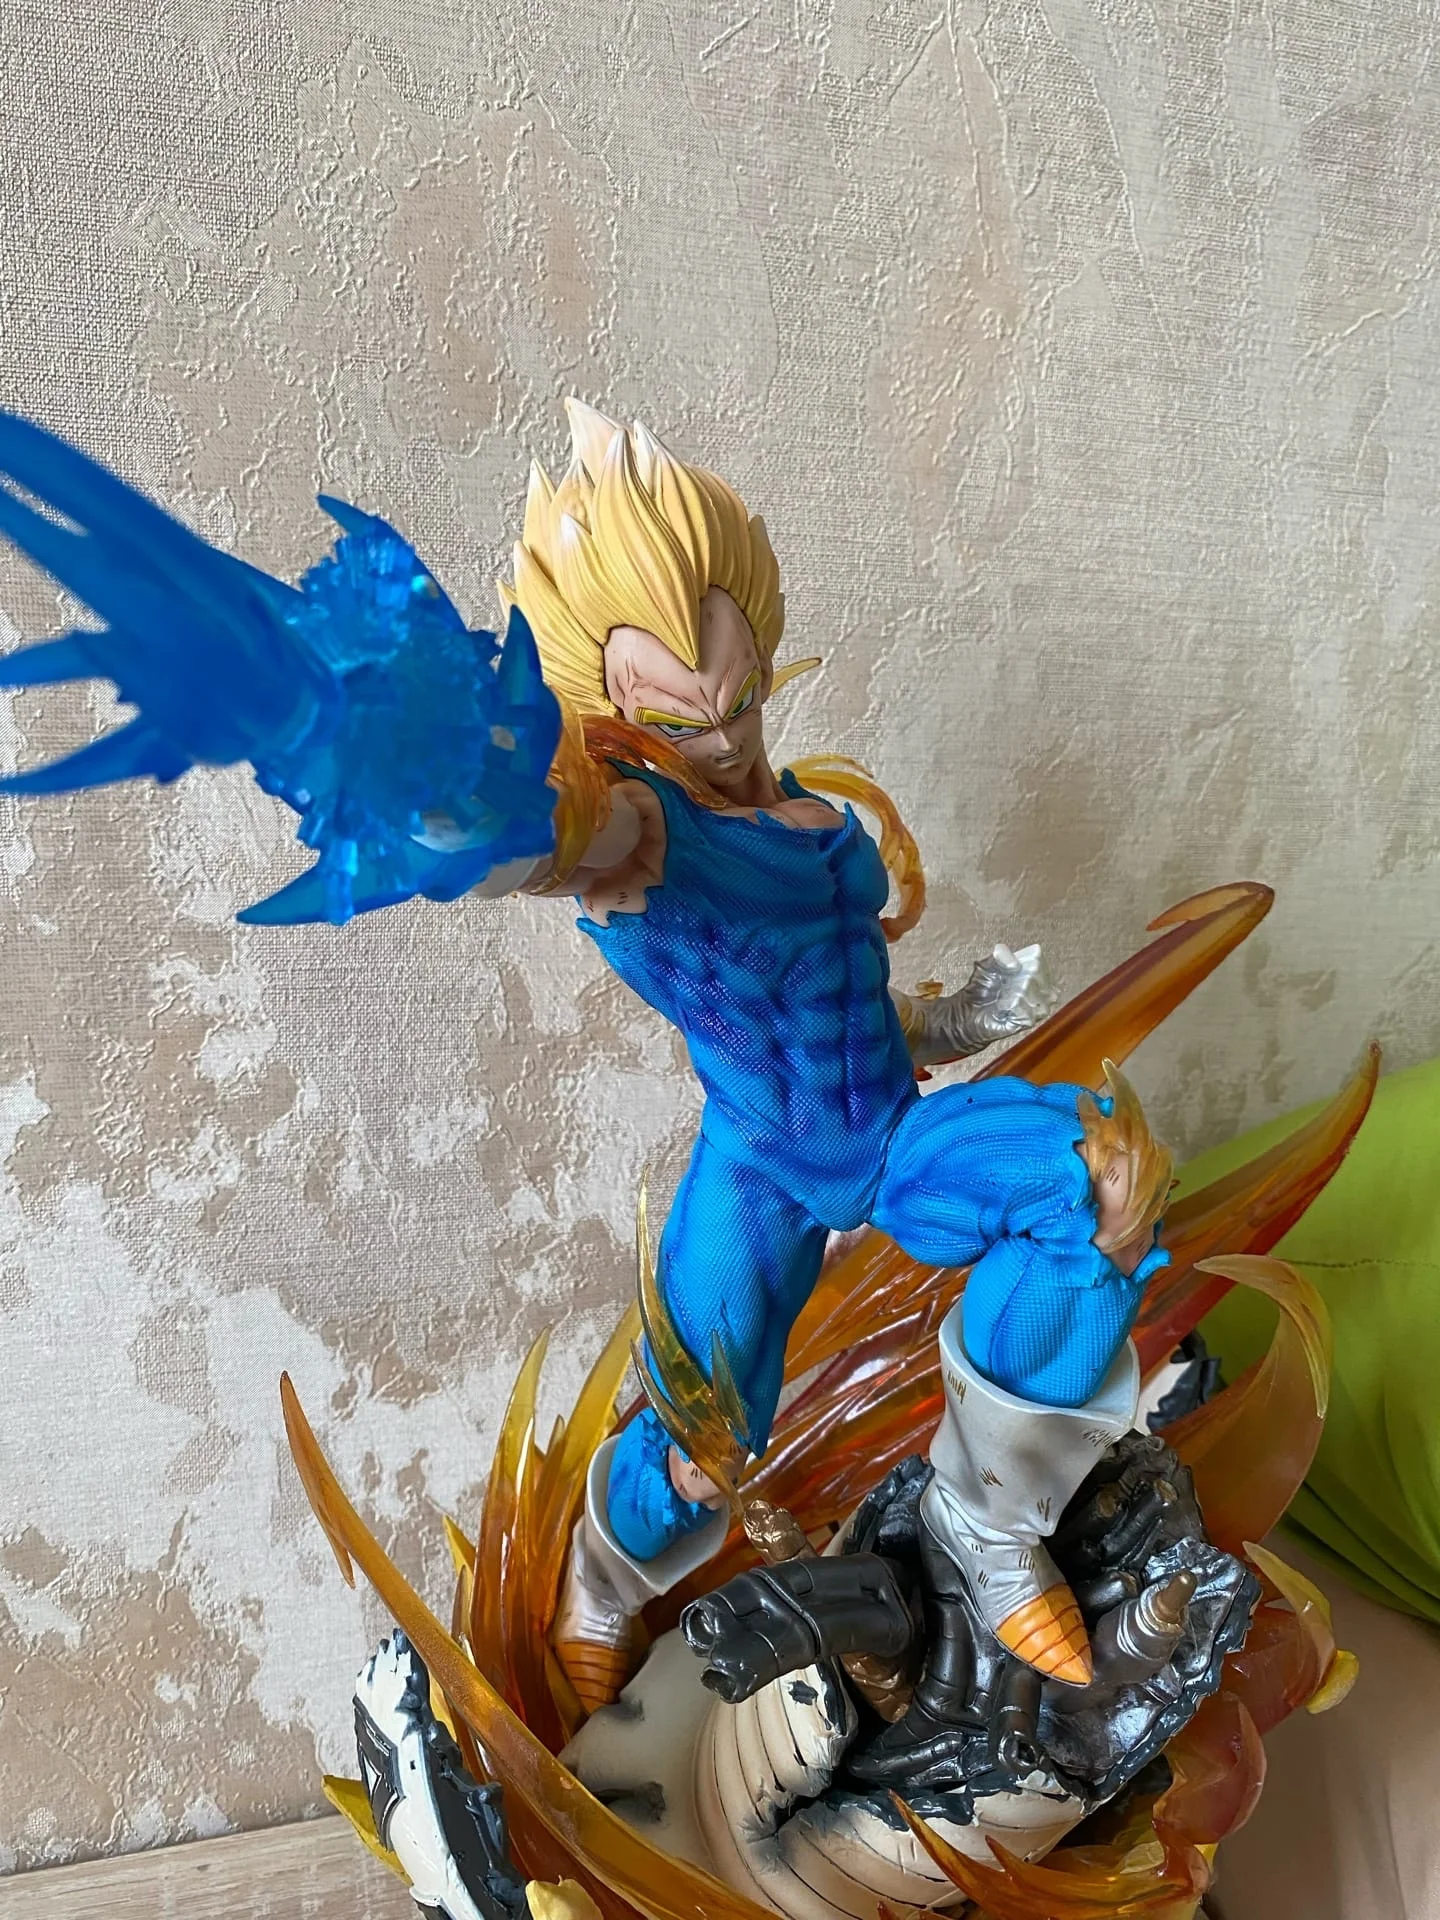 LS Dragon Ball Super Anime Figurine Model GK Super Saiyan Vegeta figure Action Figures 45cm statue Collection Toy figma photo review